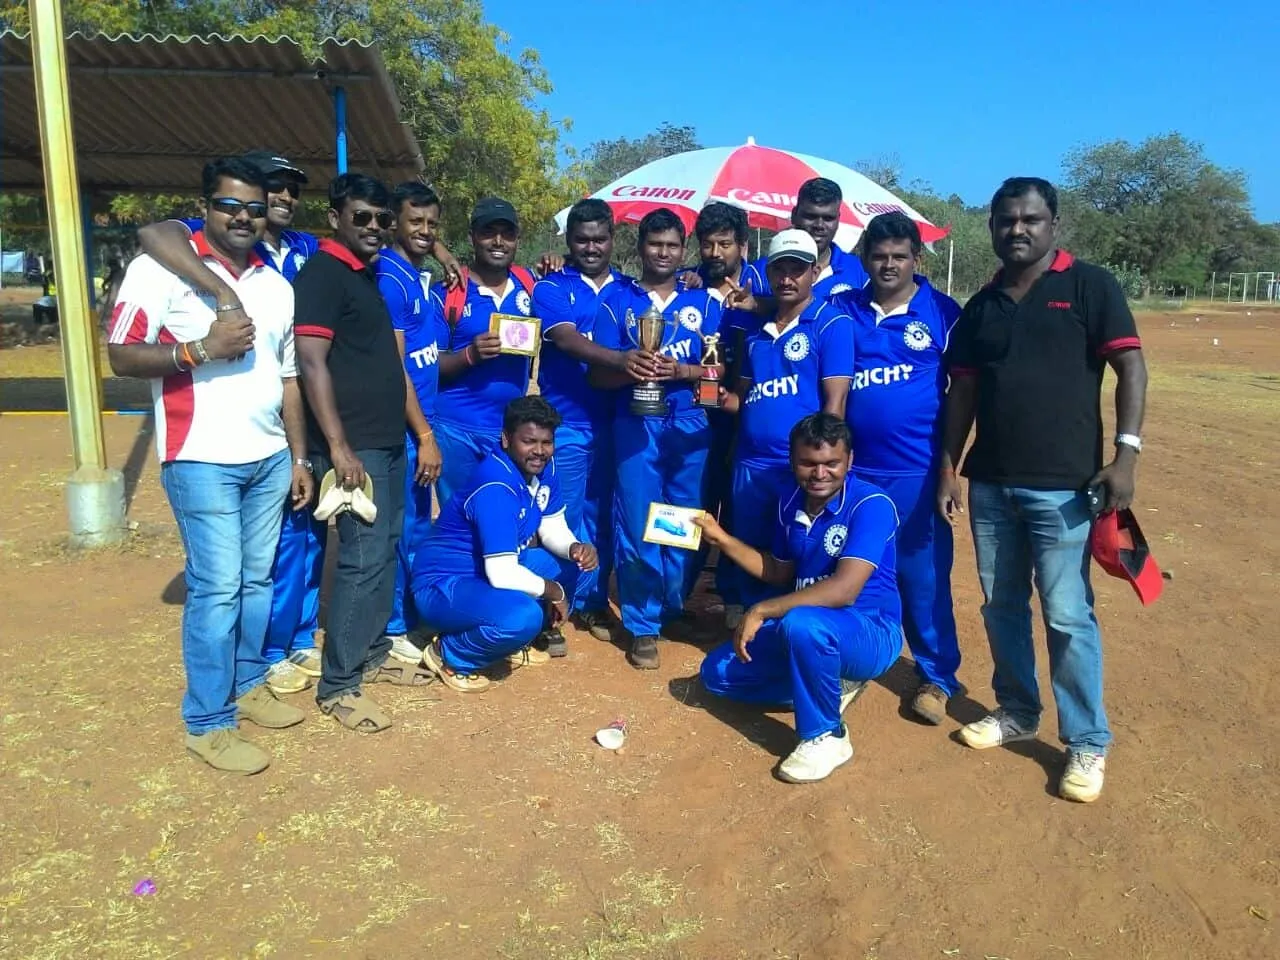 Trichy Association wins cricket tournament